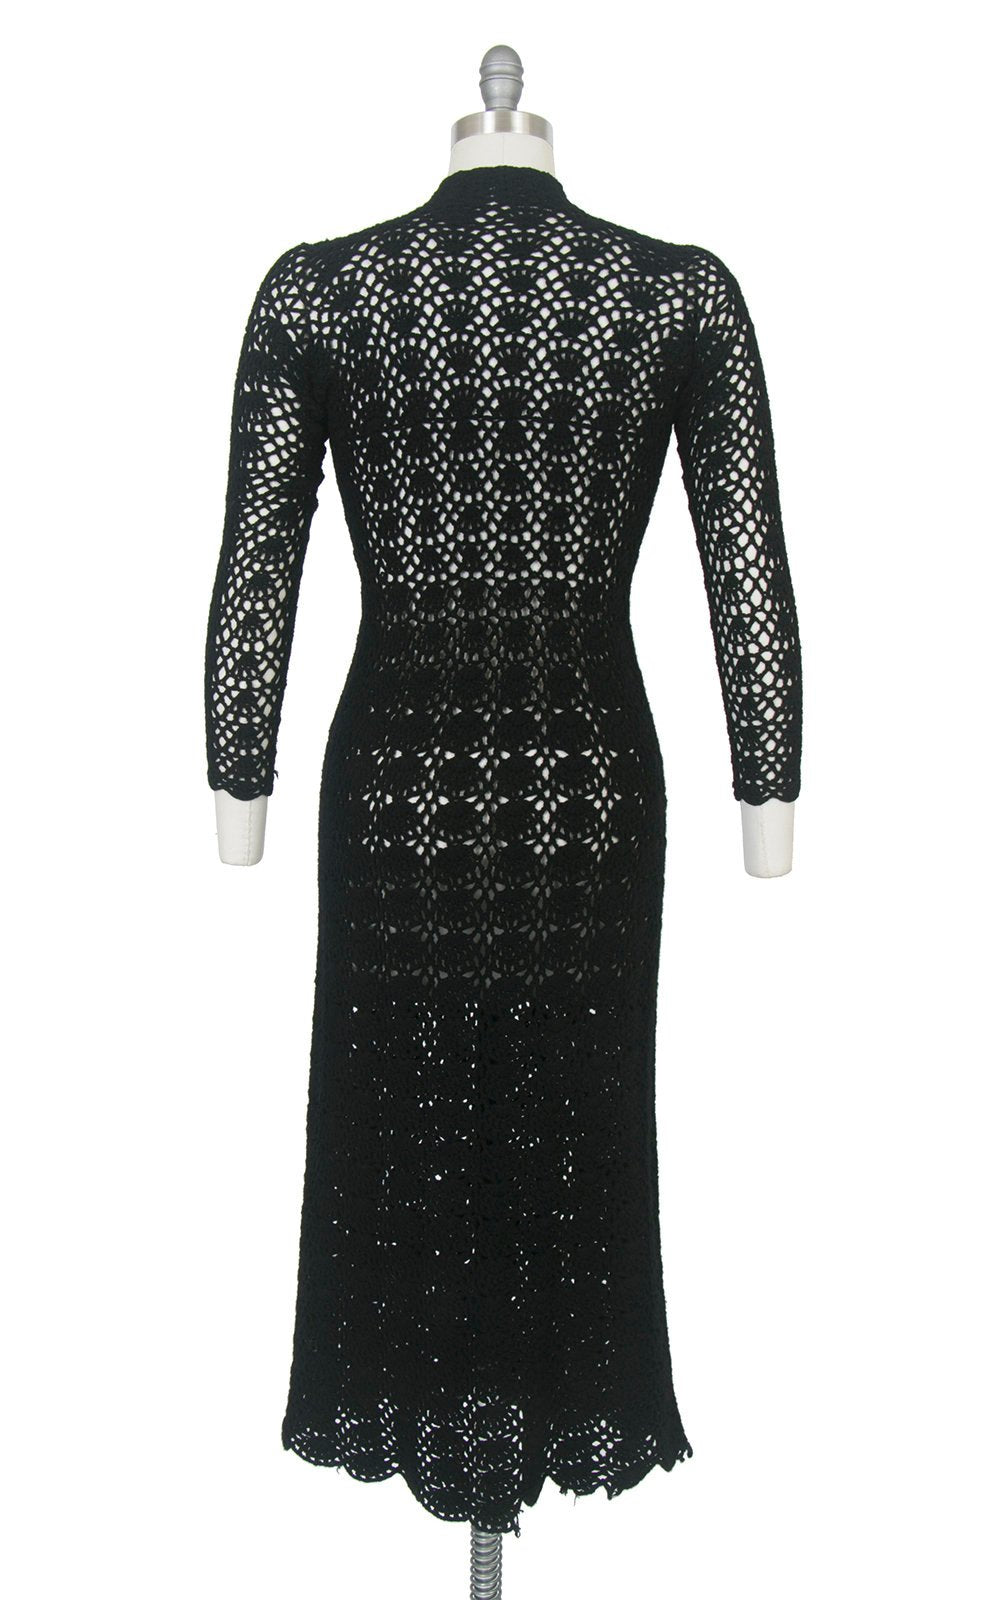 Vintage 1970s Sweater Dress | 70s Black Crochet See Through Sheer Long Sleeve Witchy Boho Midi Dress (small)